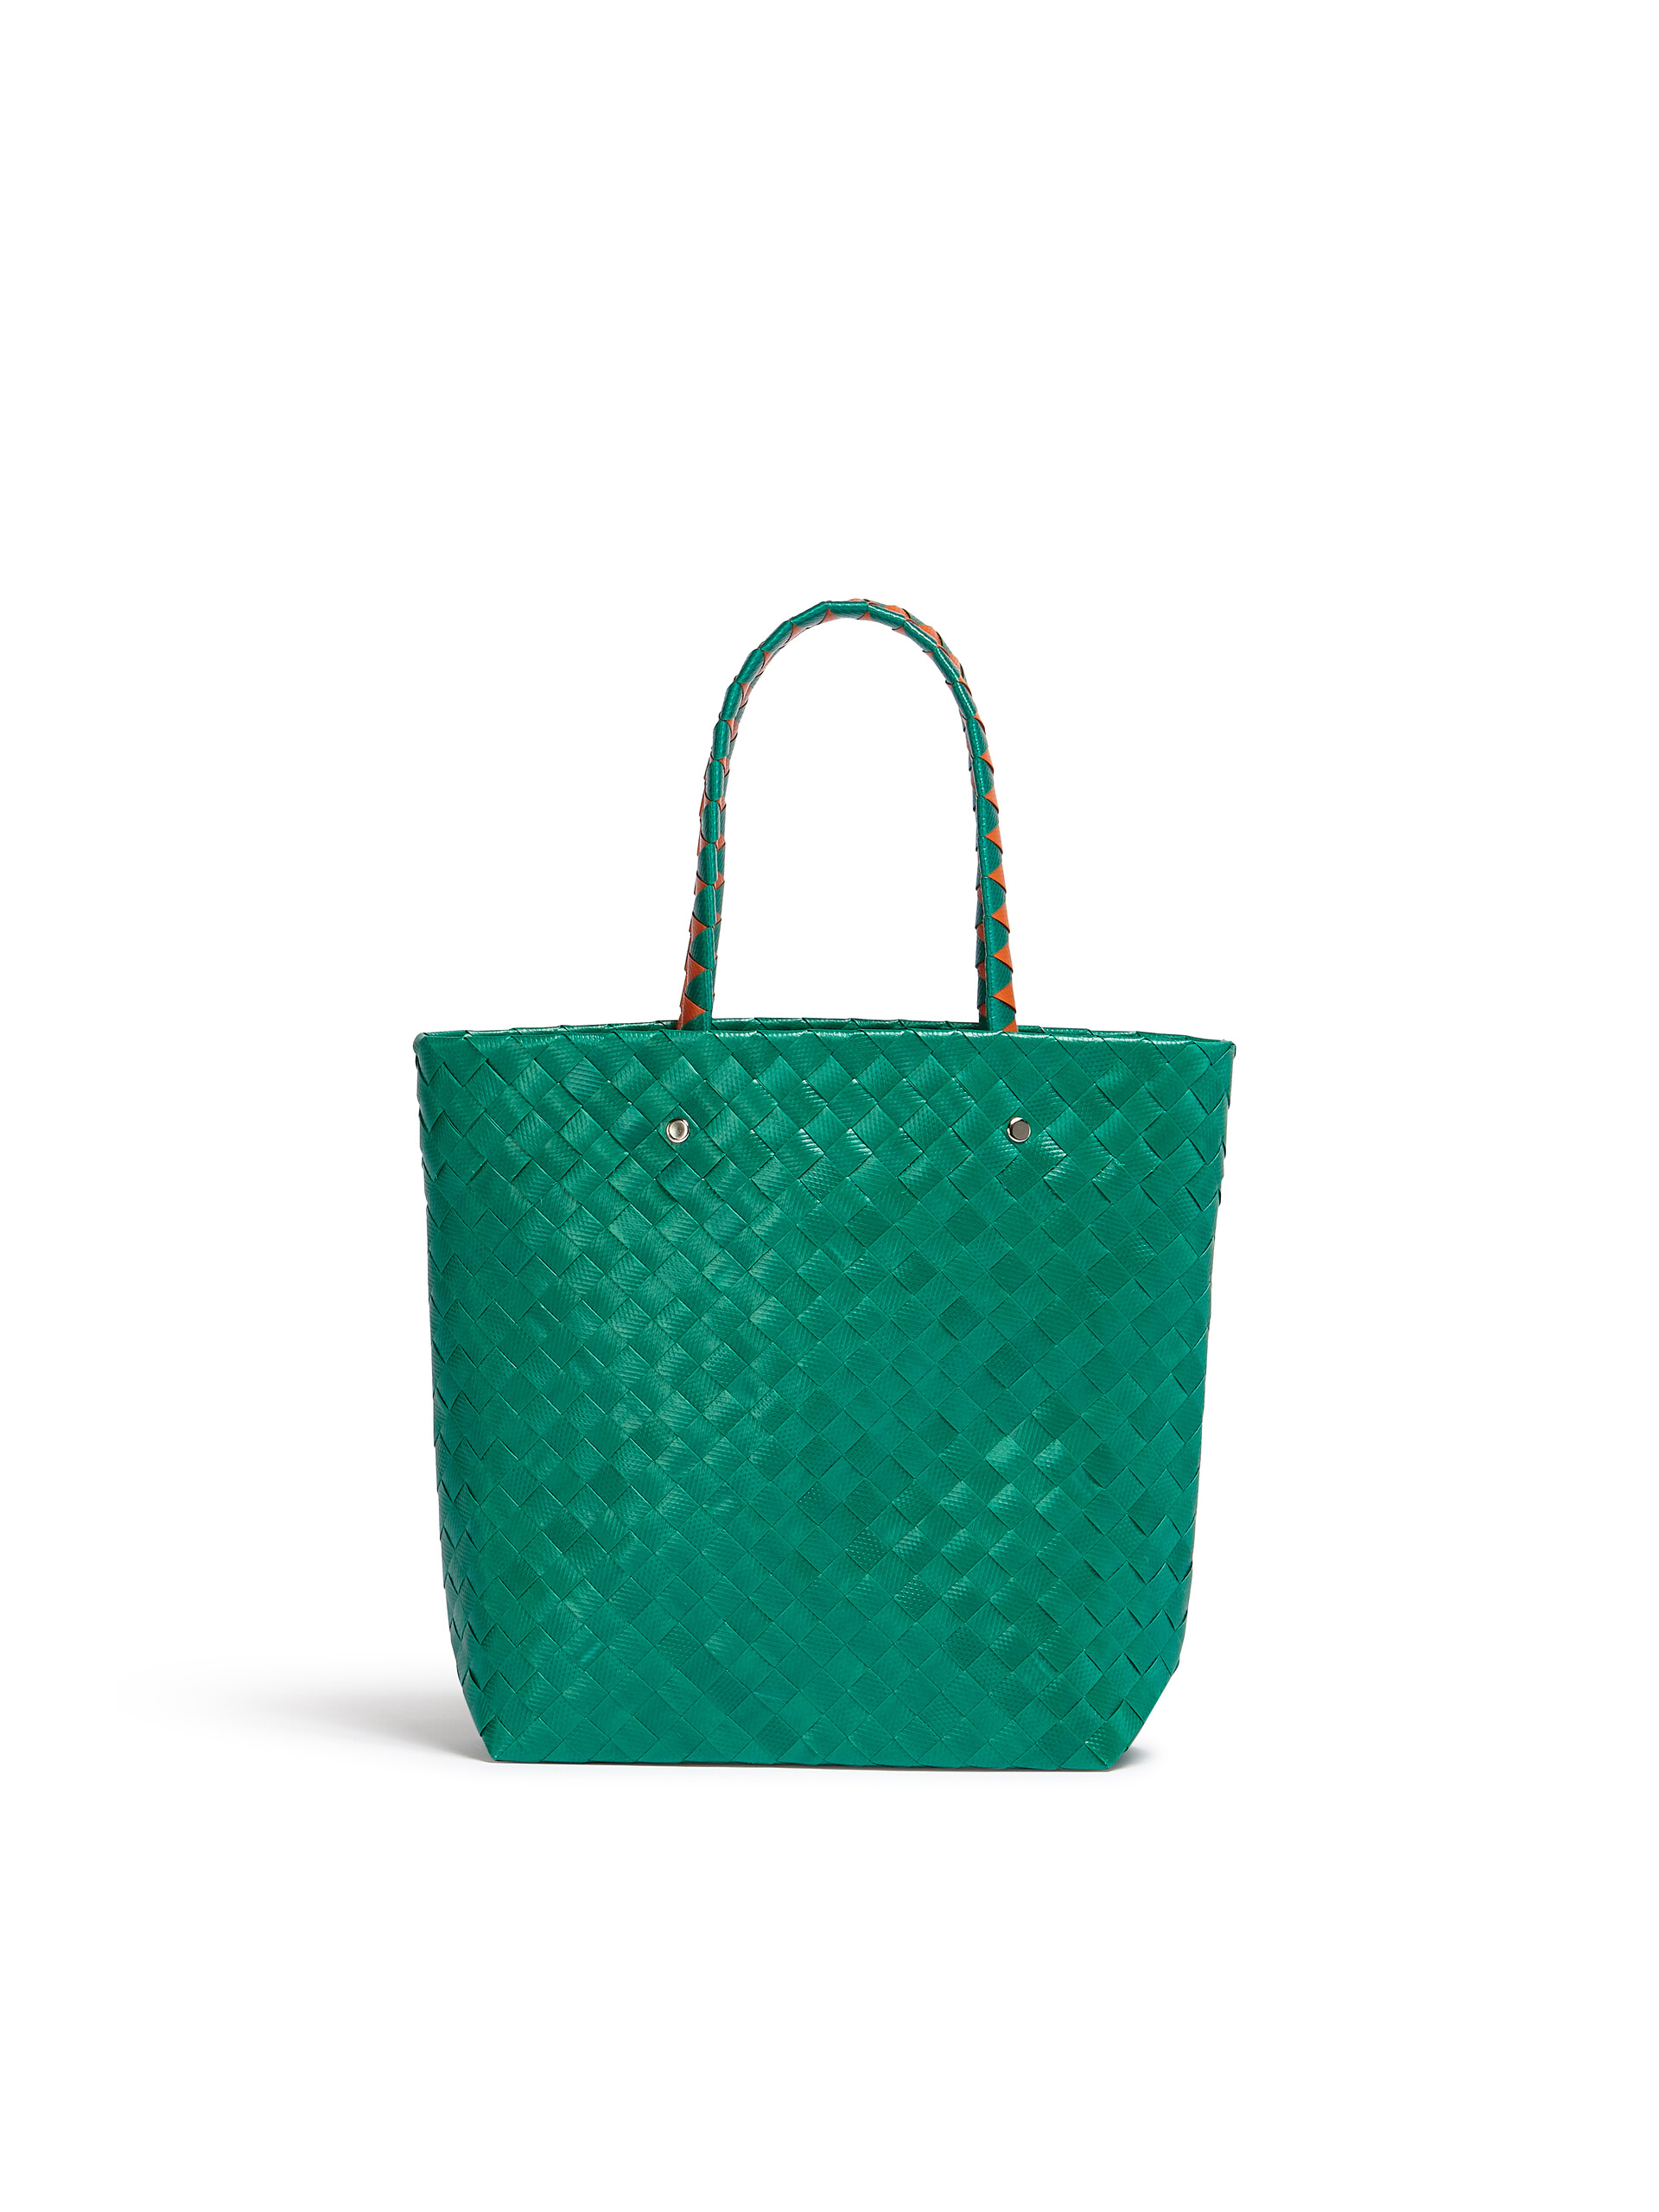 MARNI MARKET small bag in green flower motif - Bags - Image 3